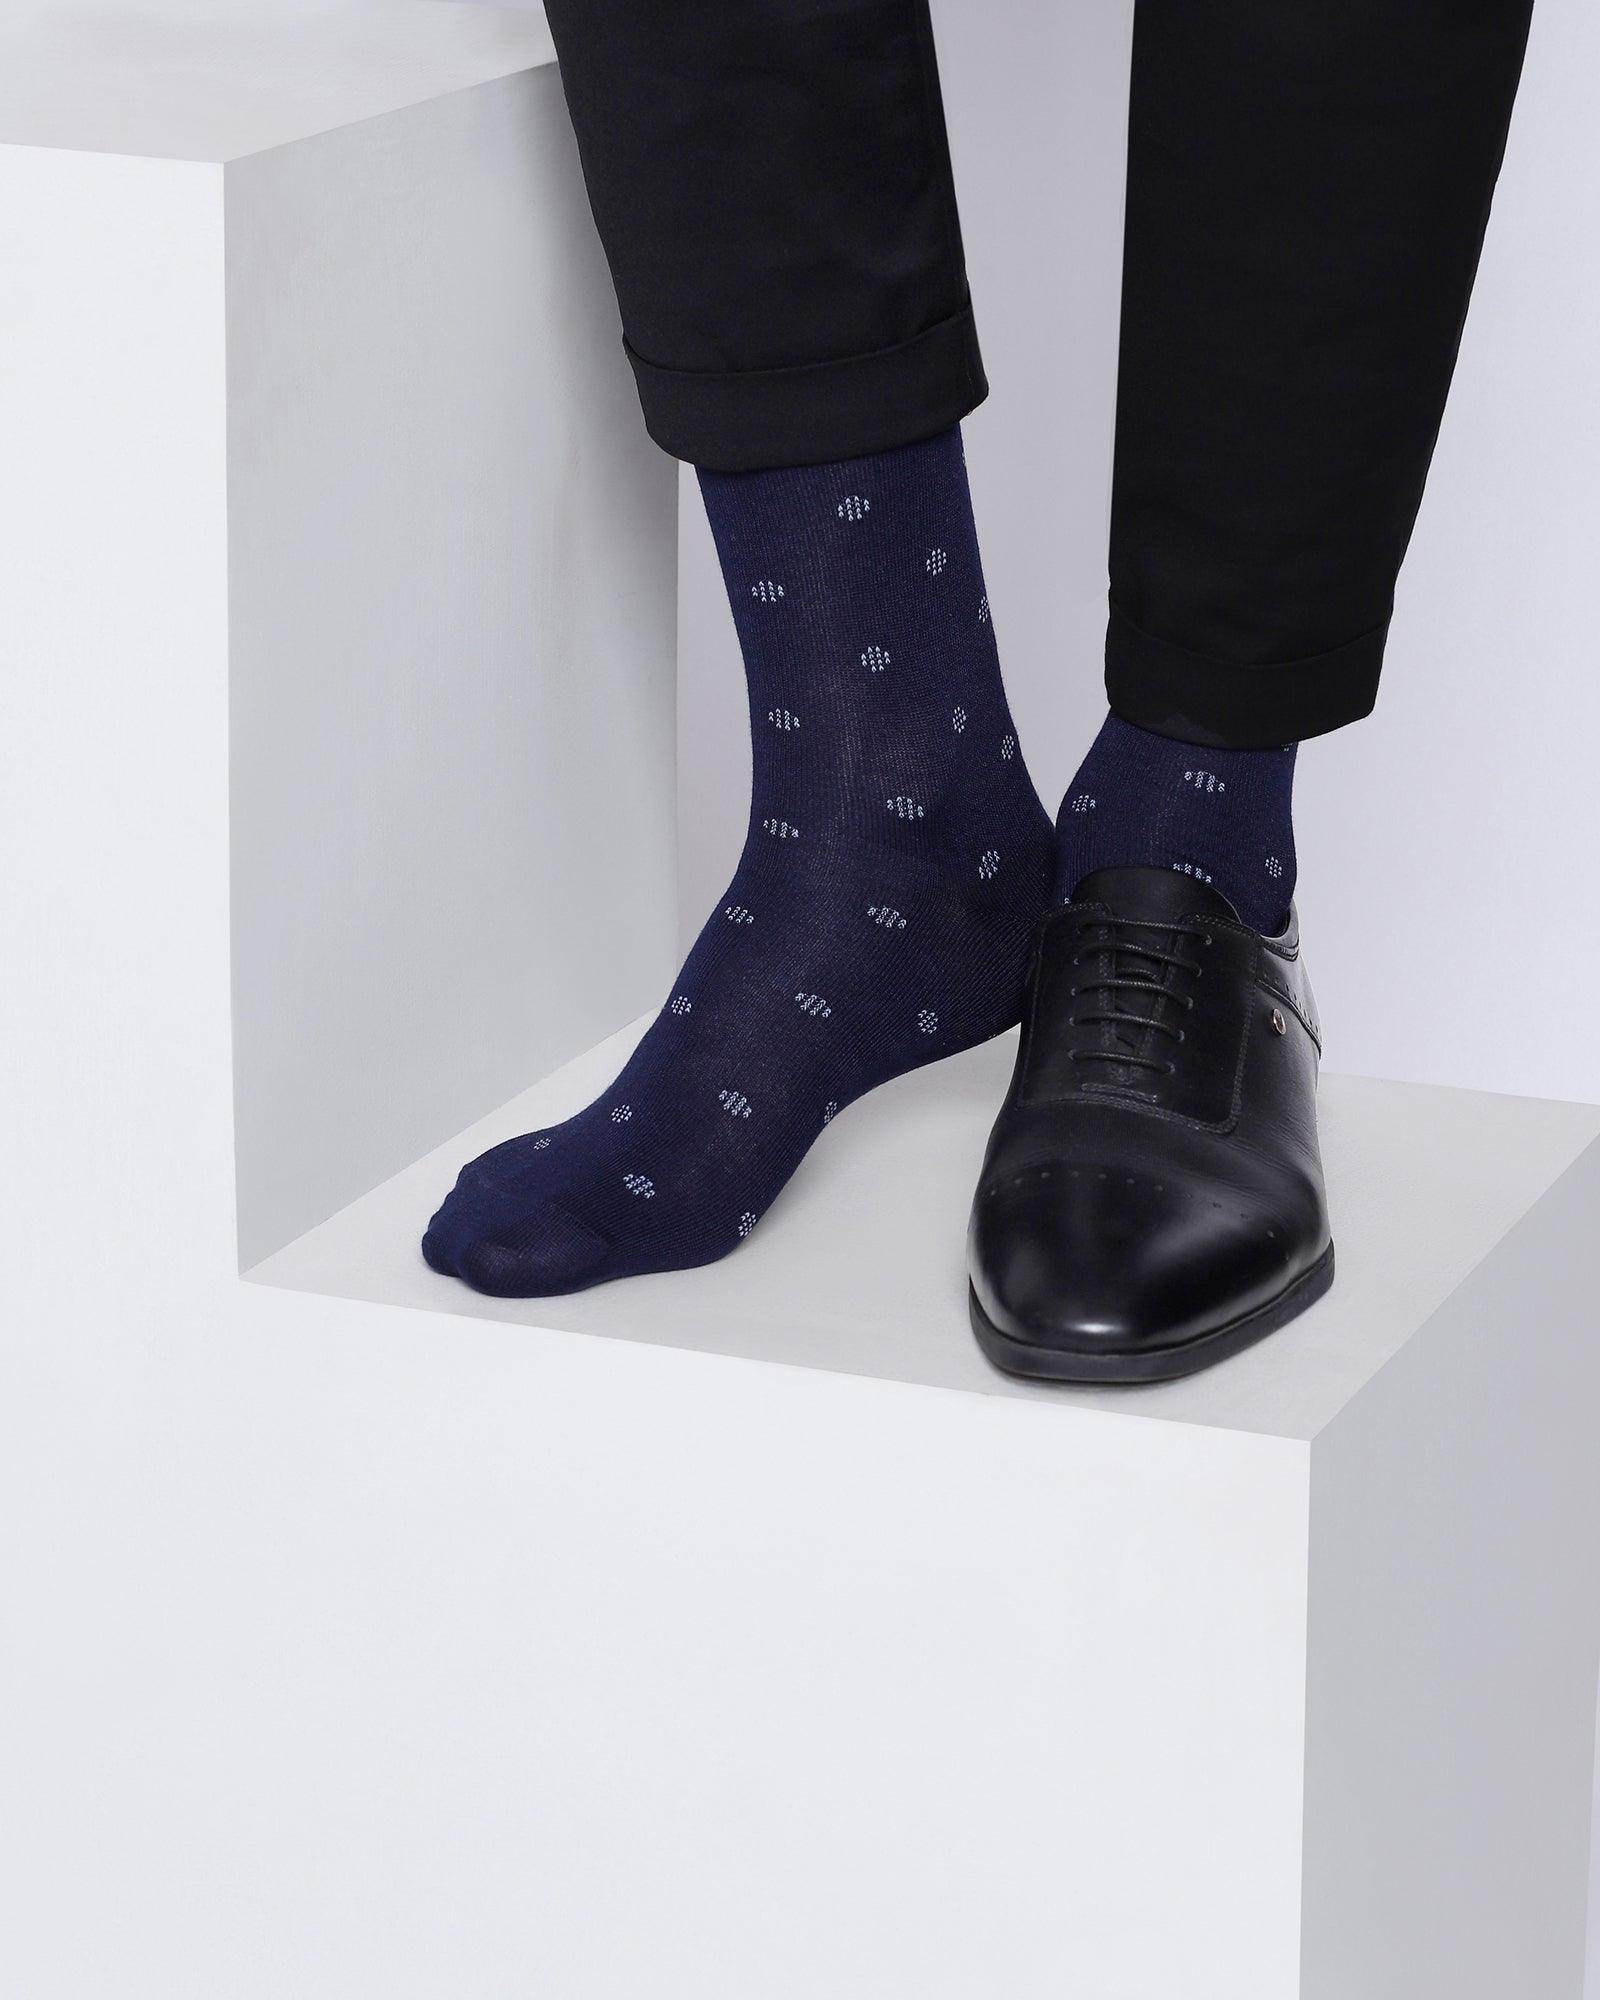 Cotton Dark Navy Printed Socks - Orek